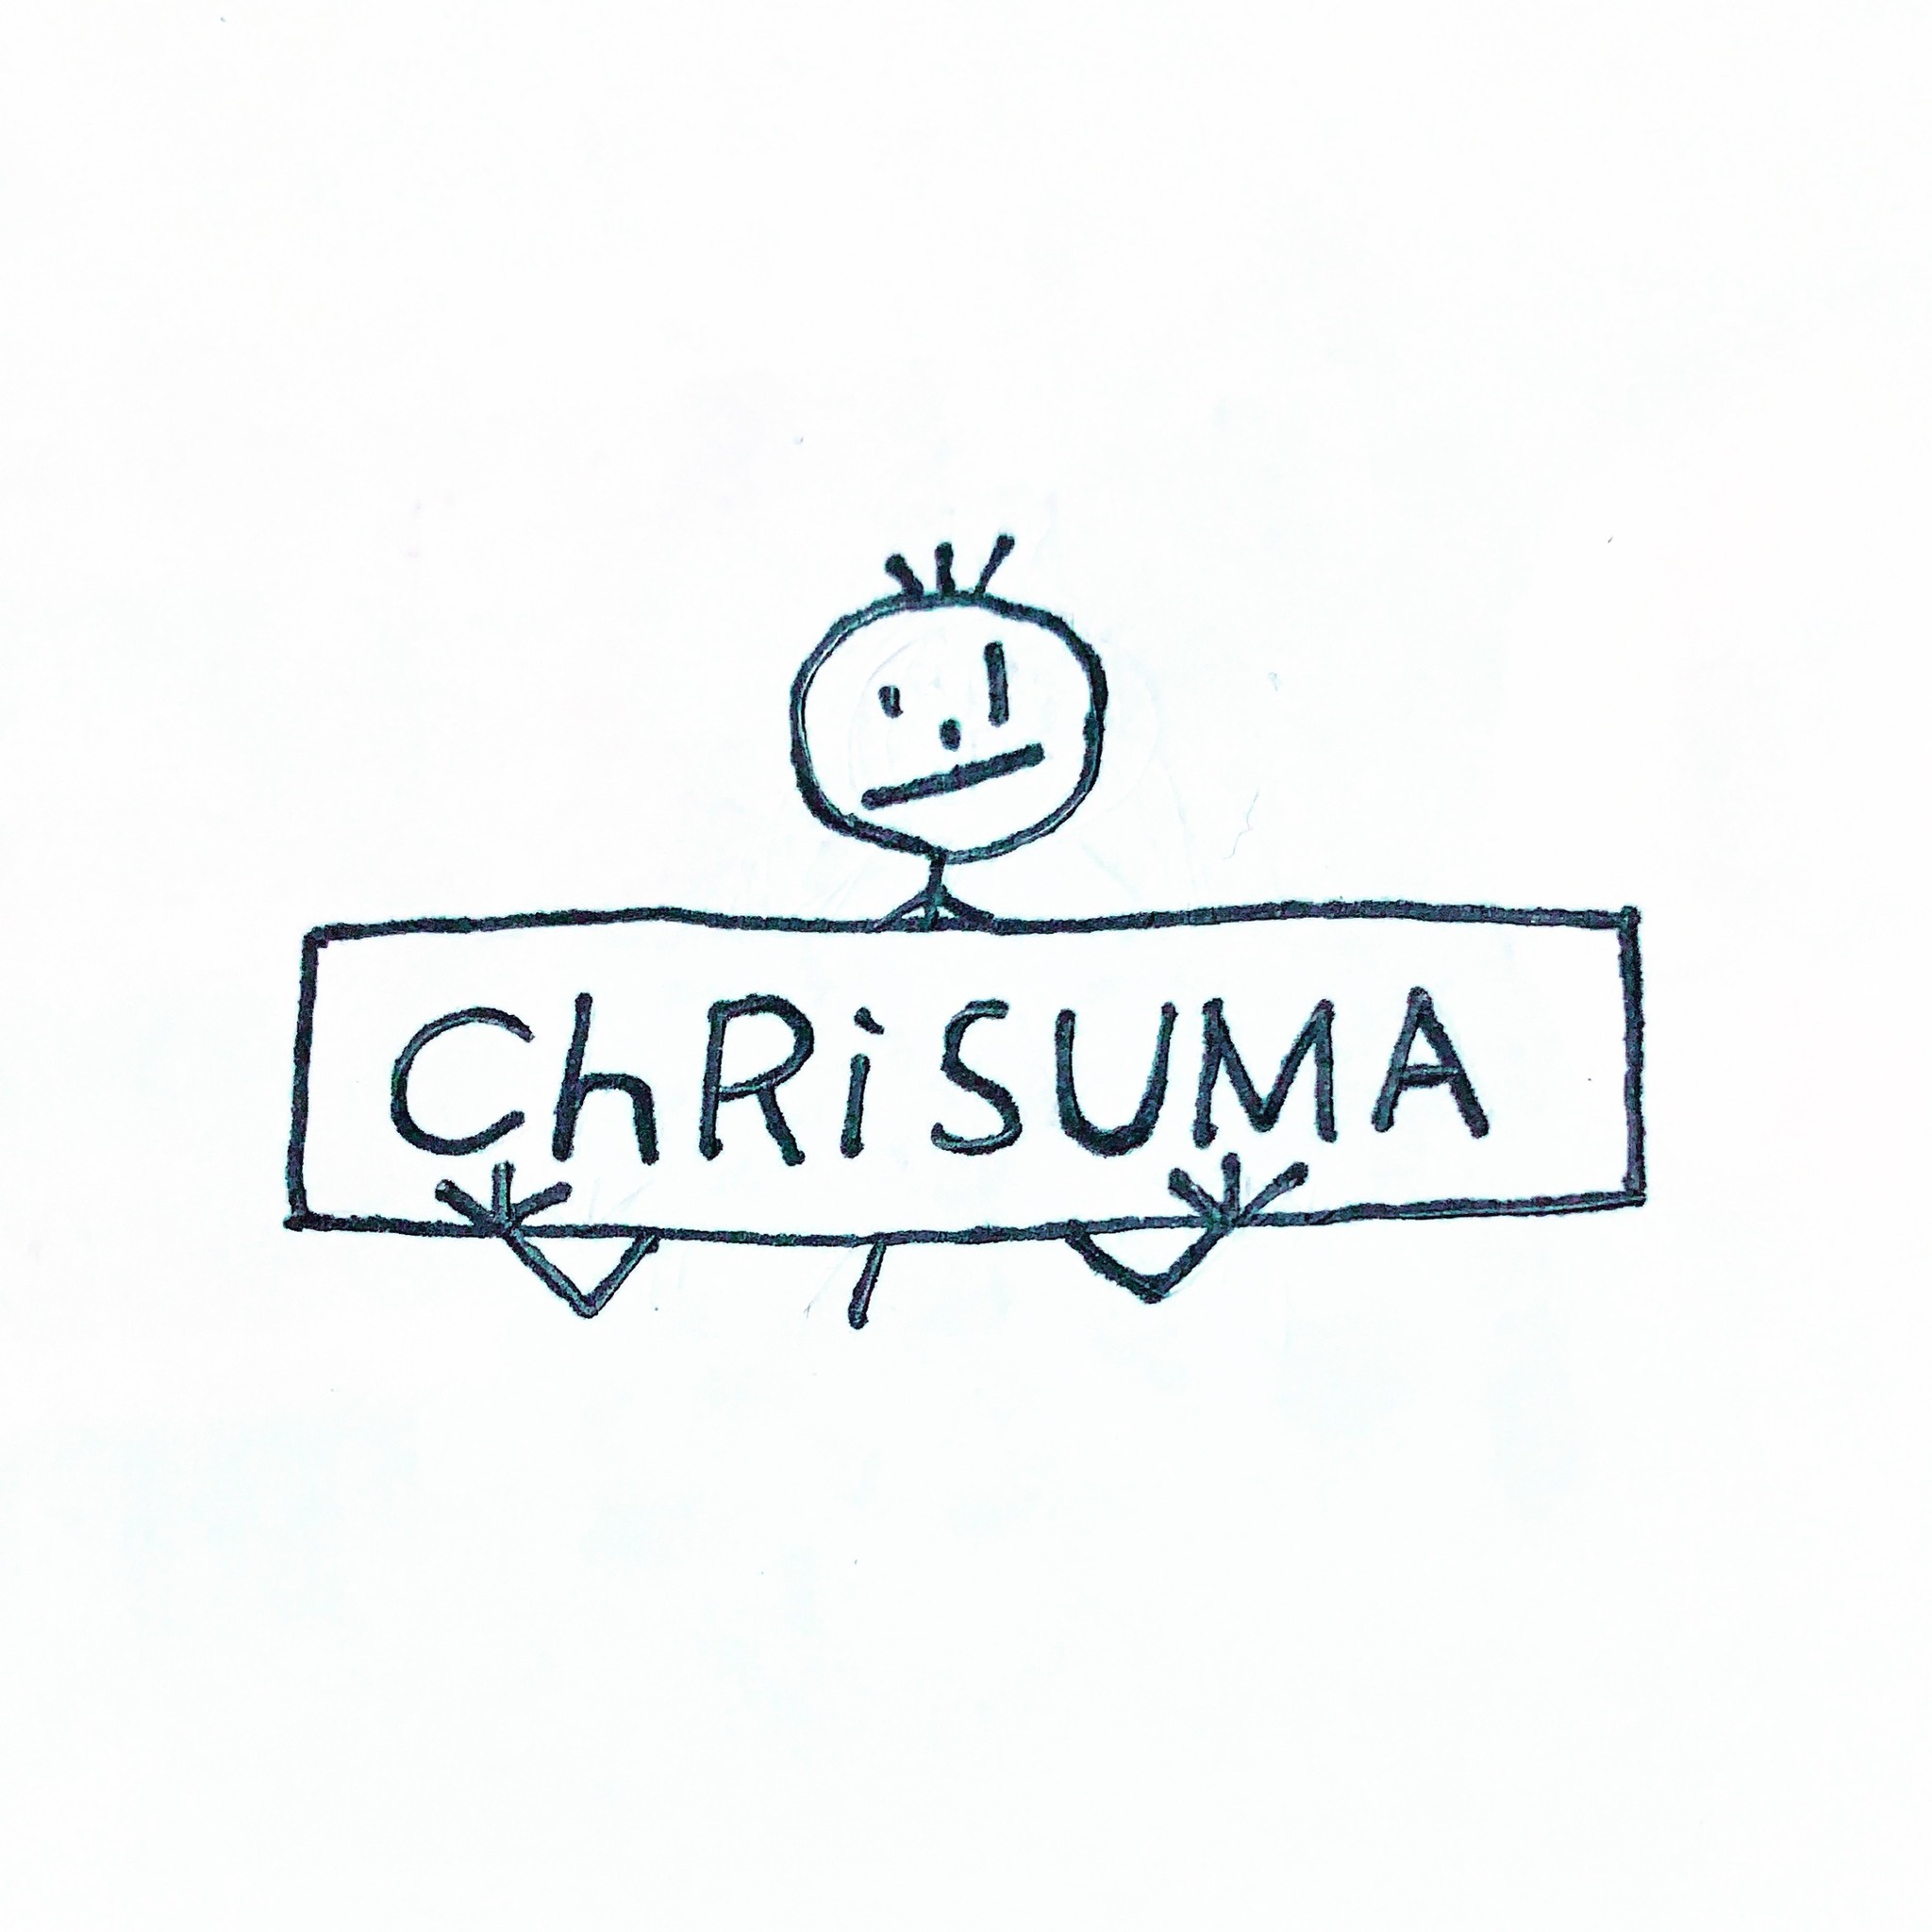 ChRiSUMA